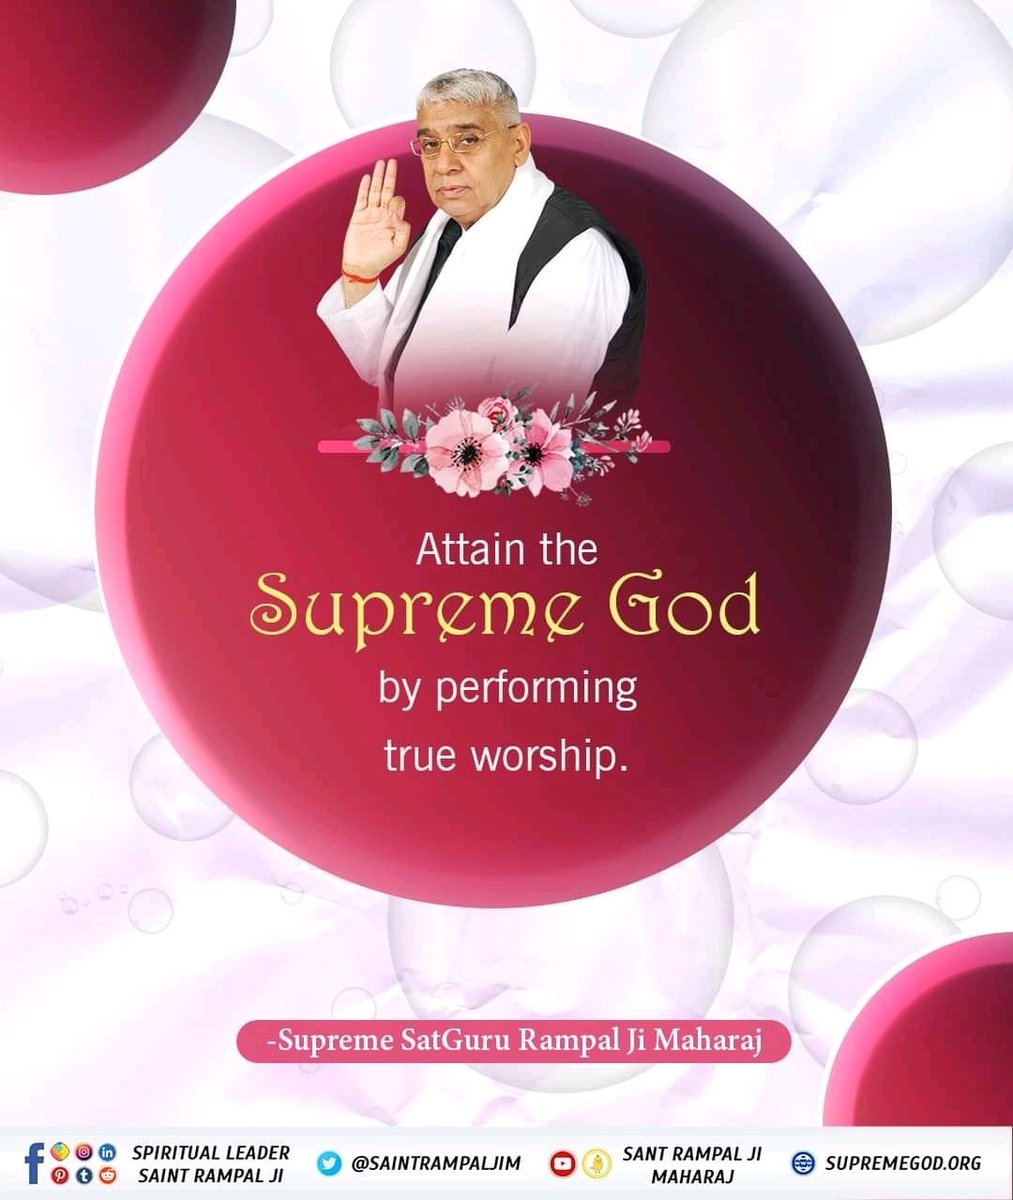 #GodMorningTuesday
Attain the Supreme God by performing true worship.
#सत_भक्ति_सन्देश
-Supreme SatGuru Rampal Ji Maharaj
#SaintRampalJiQuotes